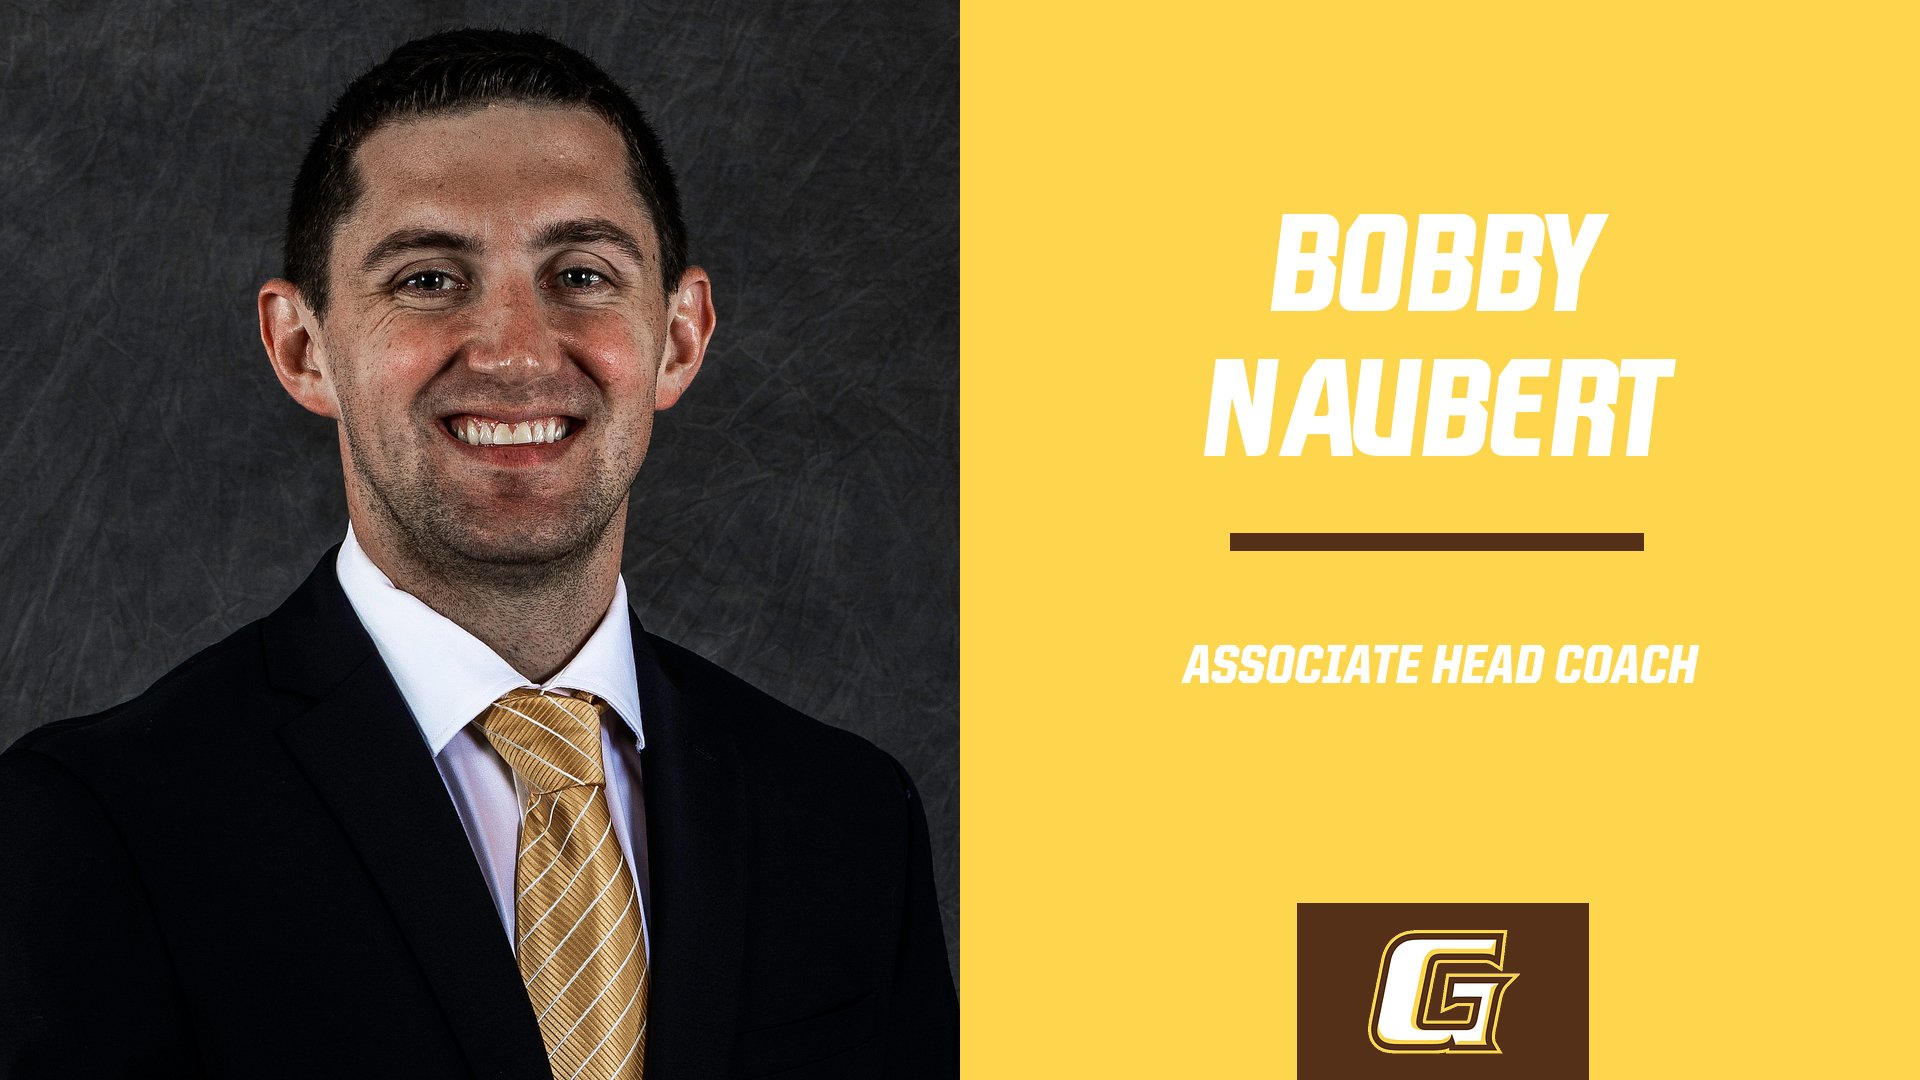 Bobby Naubert promoted to Associate Head Coach